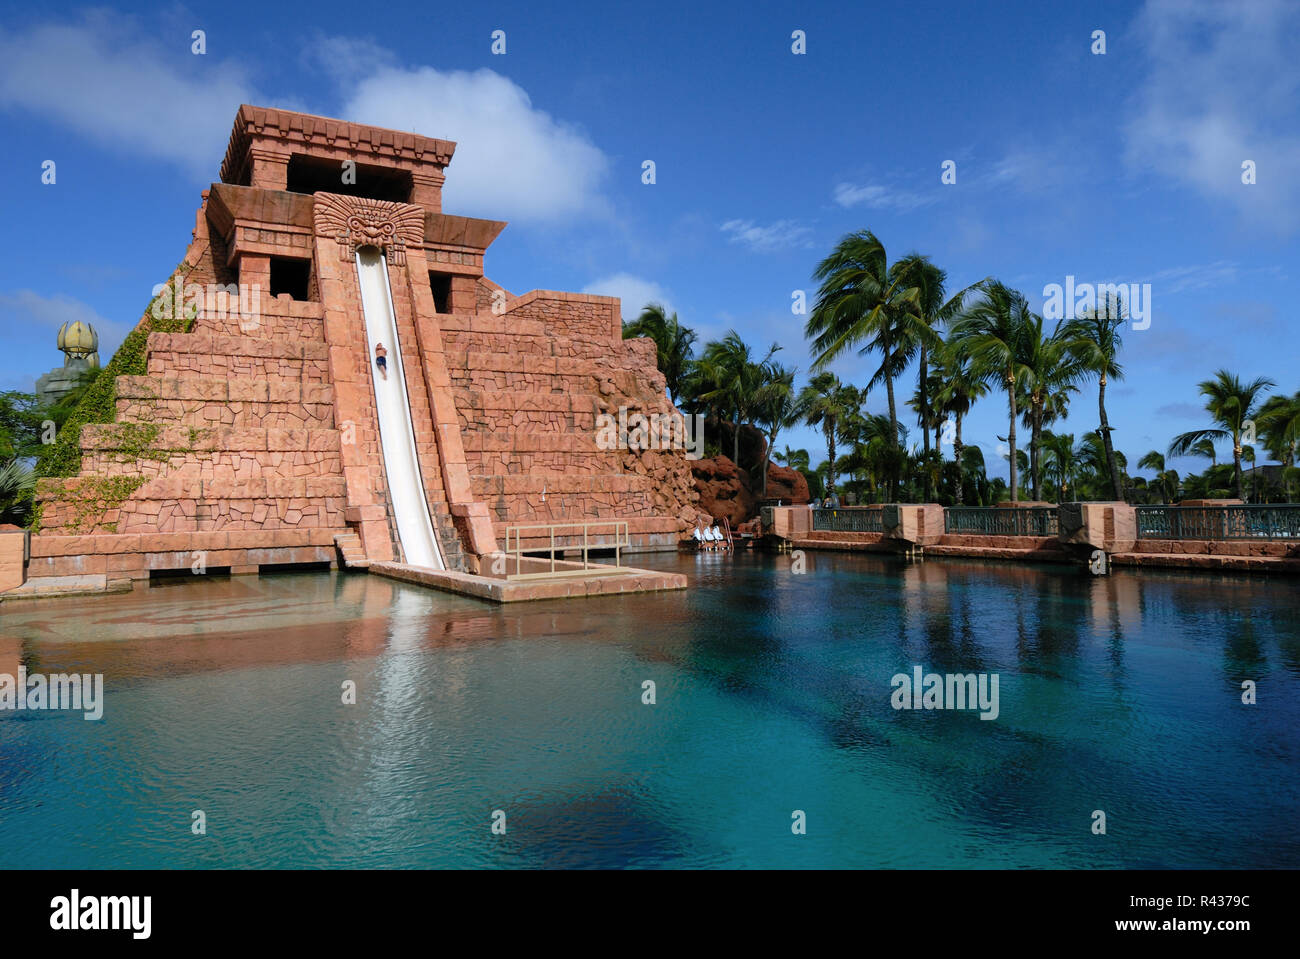 History of Atlantis Paradise Island